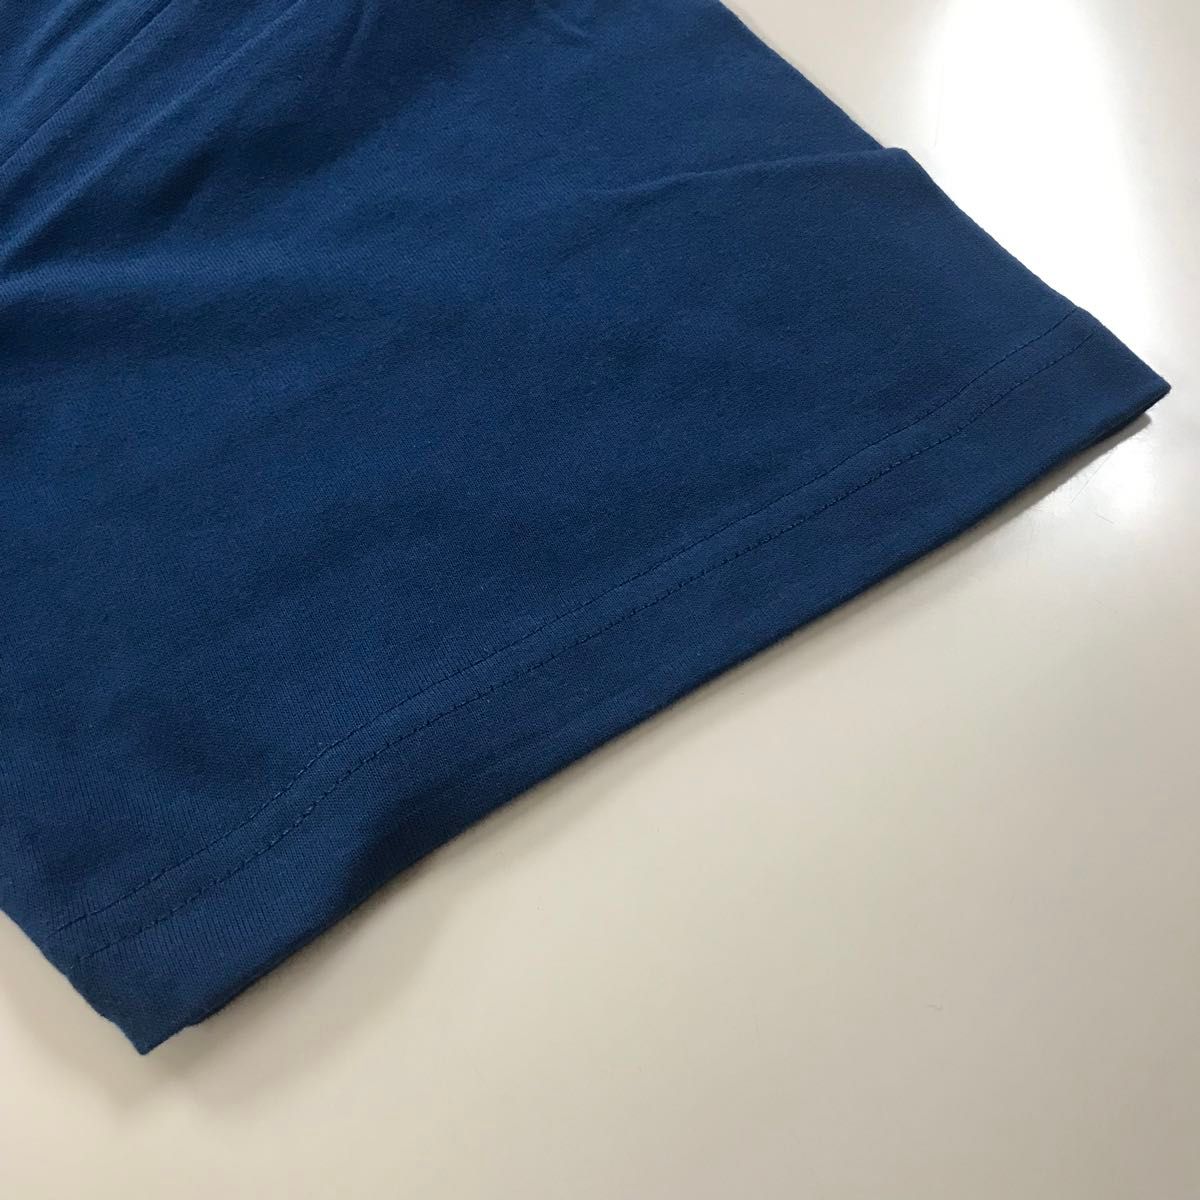 Tシャツ 半袖 5.6オンス ハイクオリティー【5001-01】L クラシックブルー 綿100%